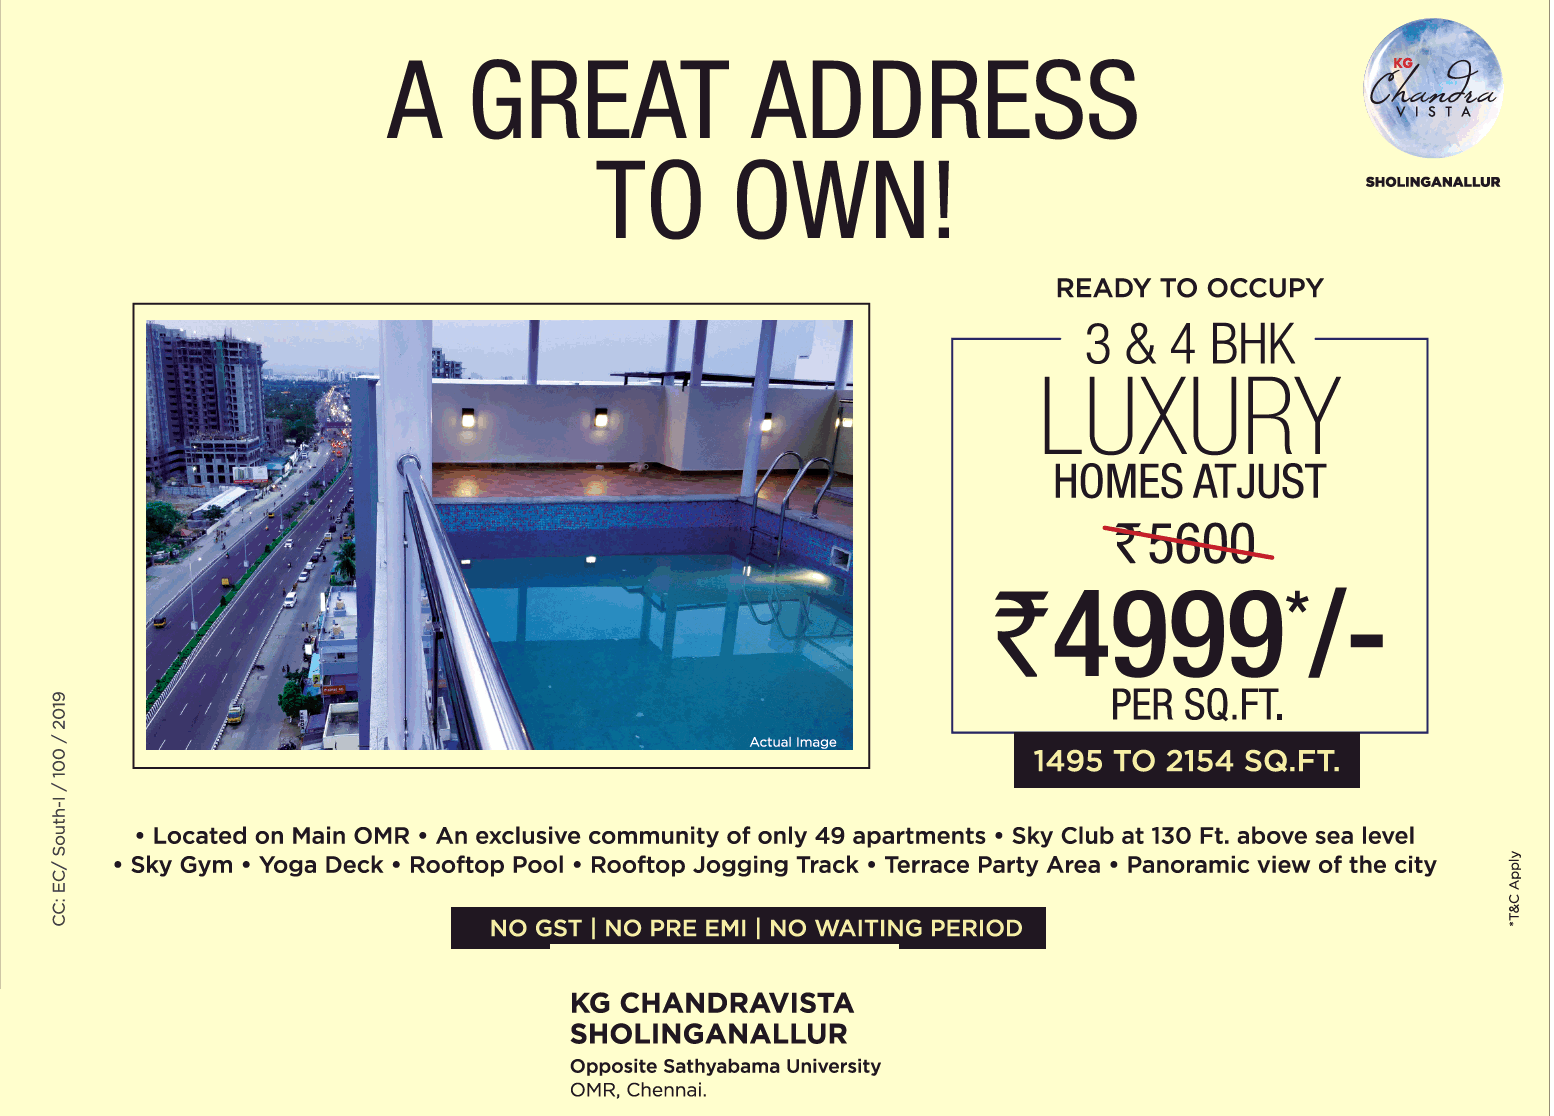 Book 3 & 4 BHK luxury homes at just Rs 4999 per sq.ft at KG Chandra Vista, Chennai